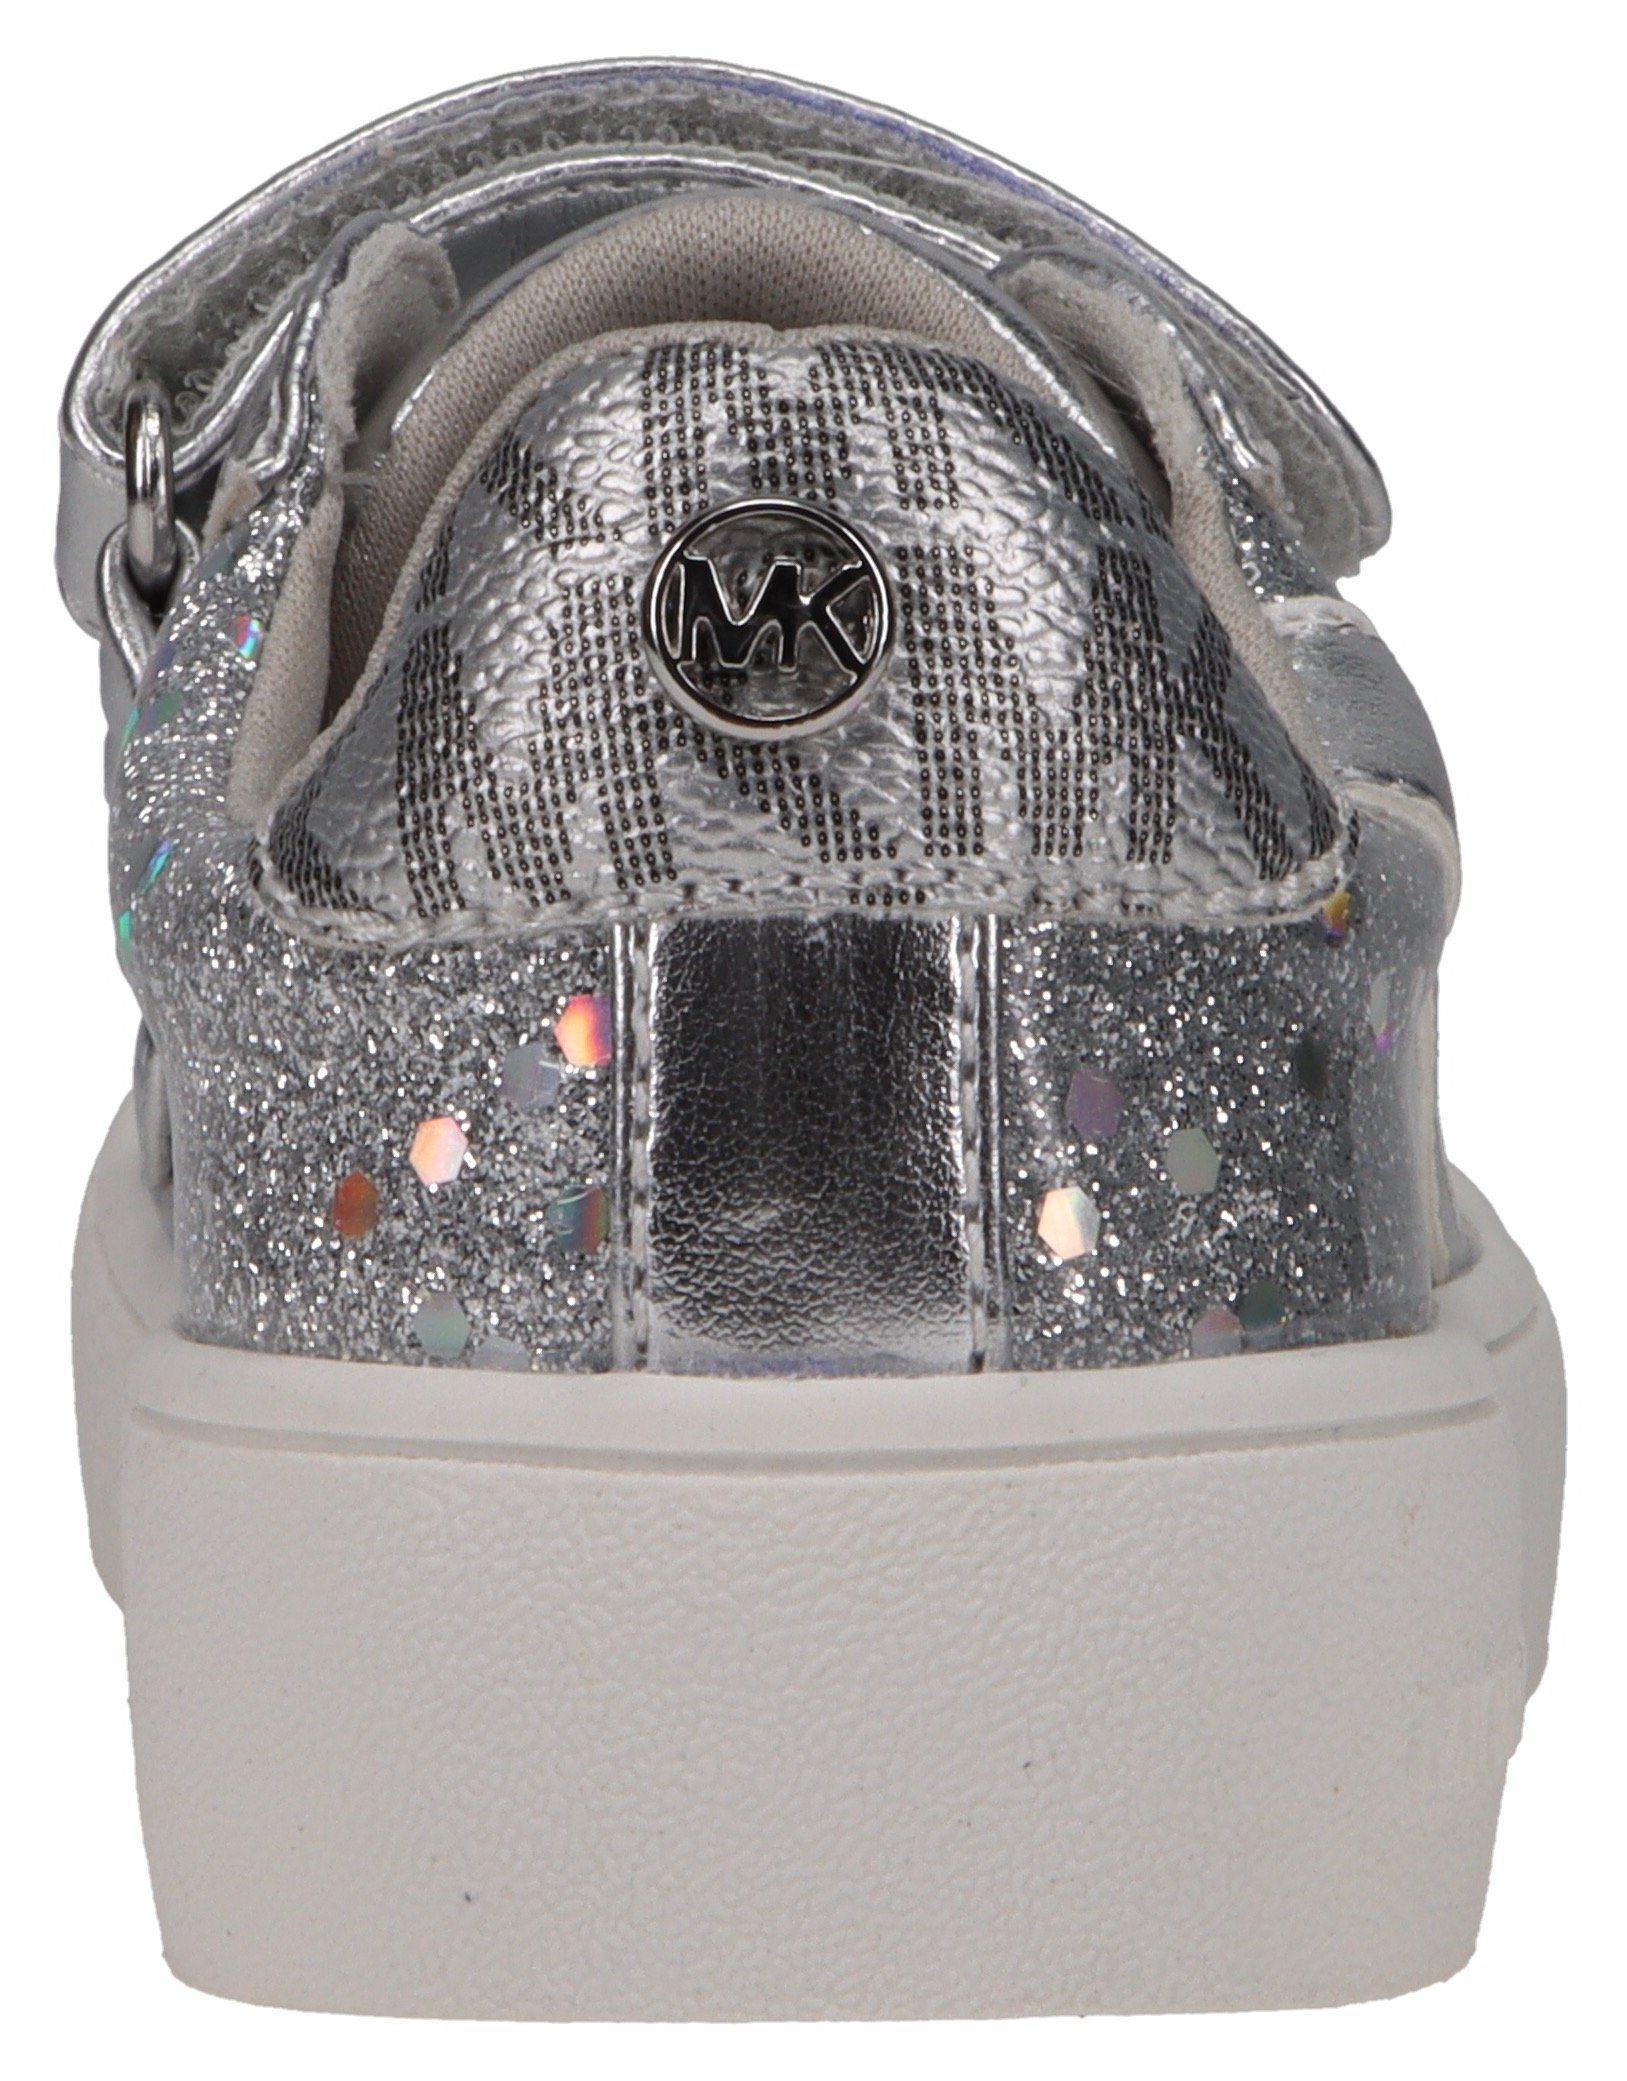 KORS SLADE Glitzer metallic Sneaker mit JEM MICHAEL BALLET MK silberfarben KIDS Details Klettschuh